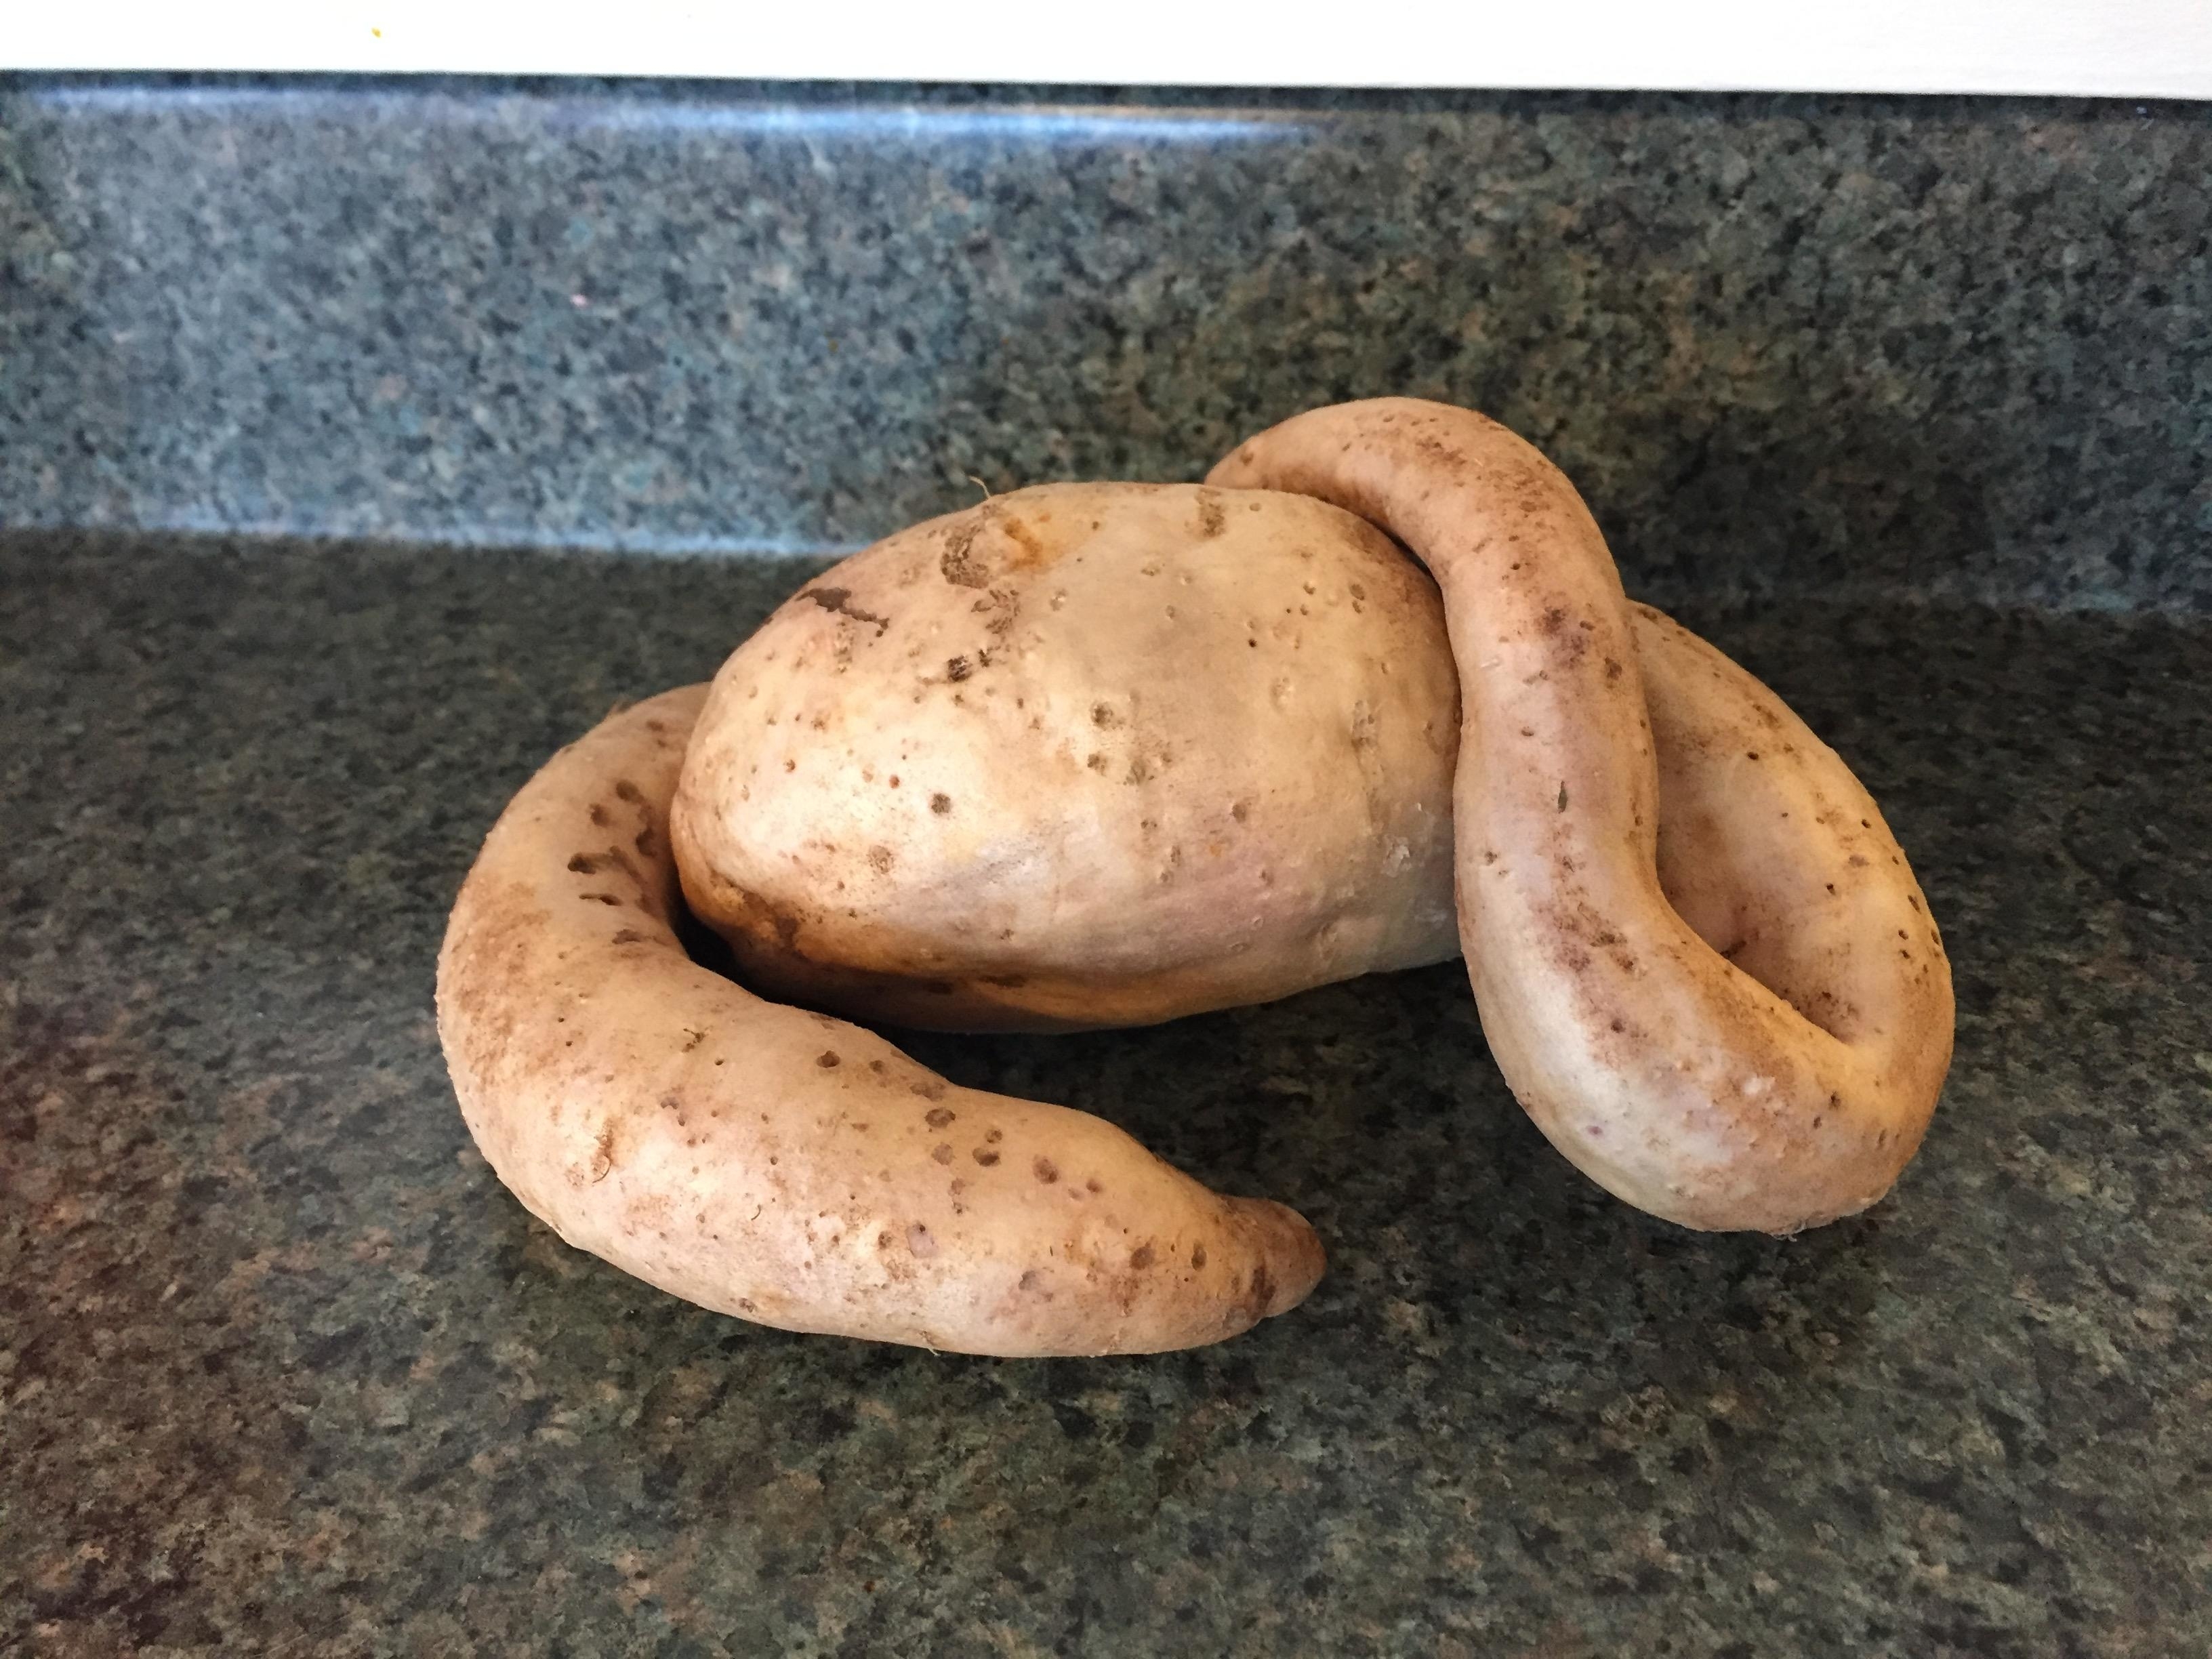 a giant potato